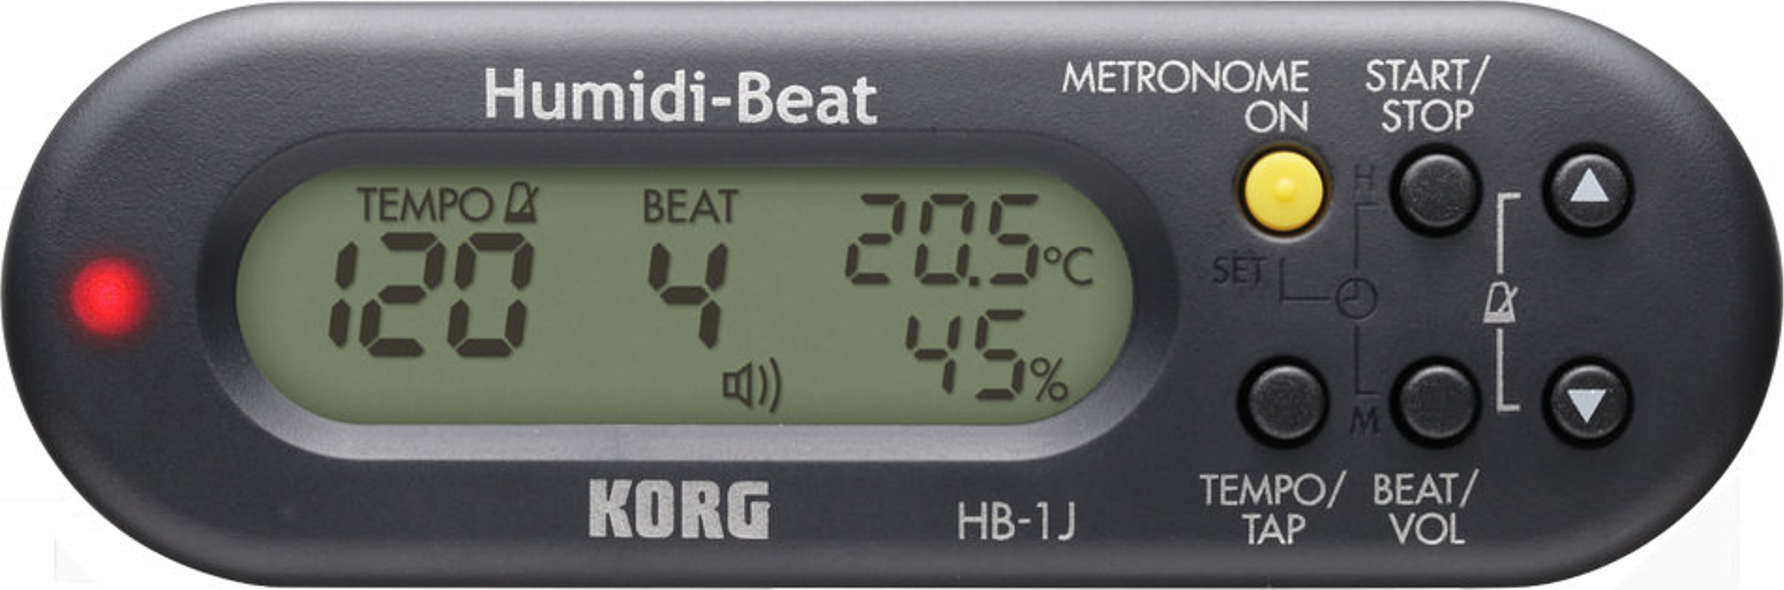 Korg Humidi-beat Metronome With Humidity Temperature Detector Black - Guitar tuner - Main picture